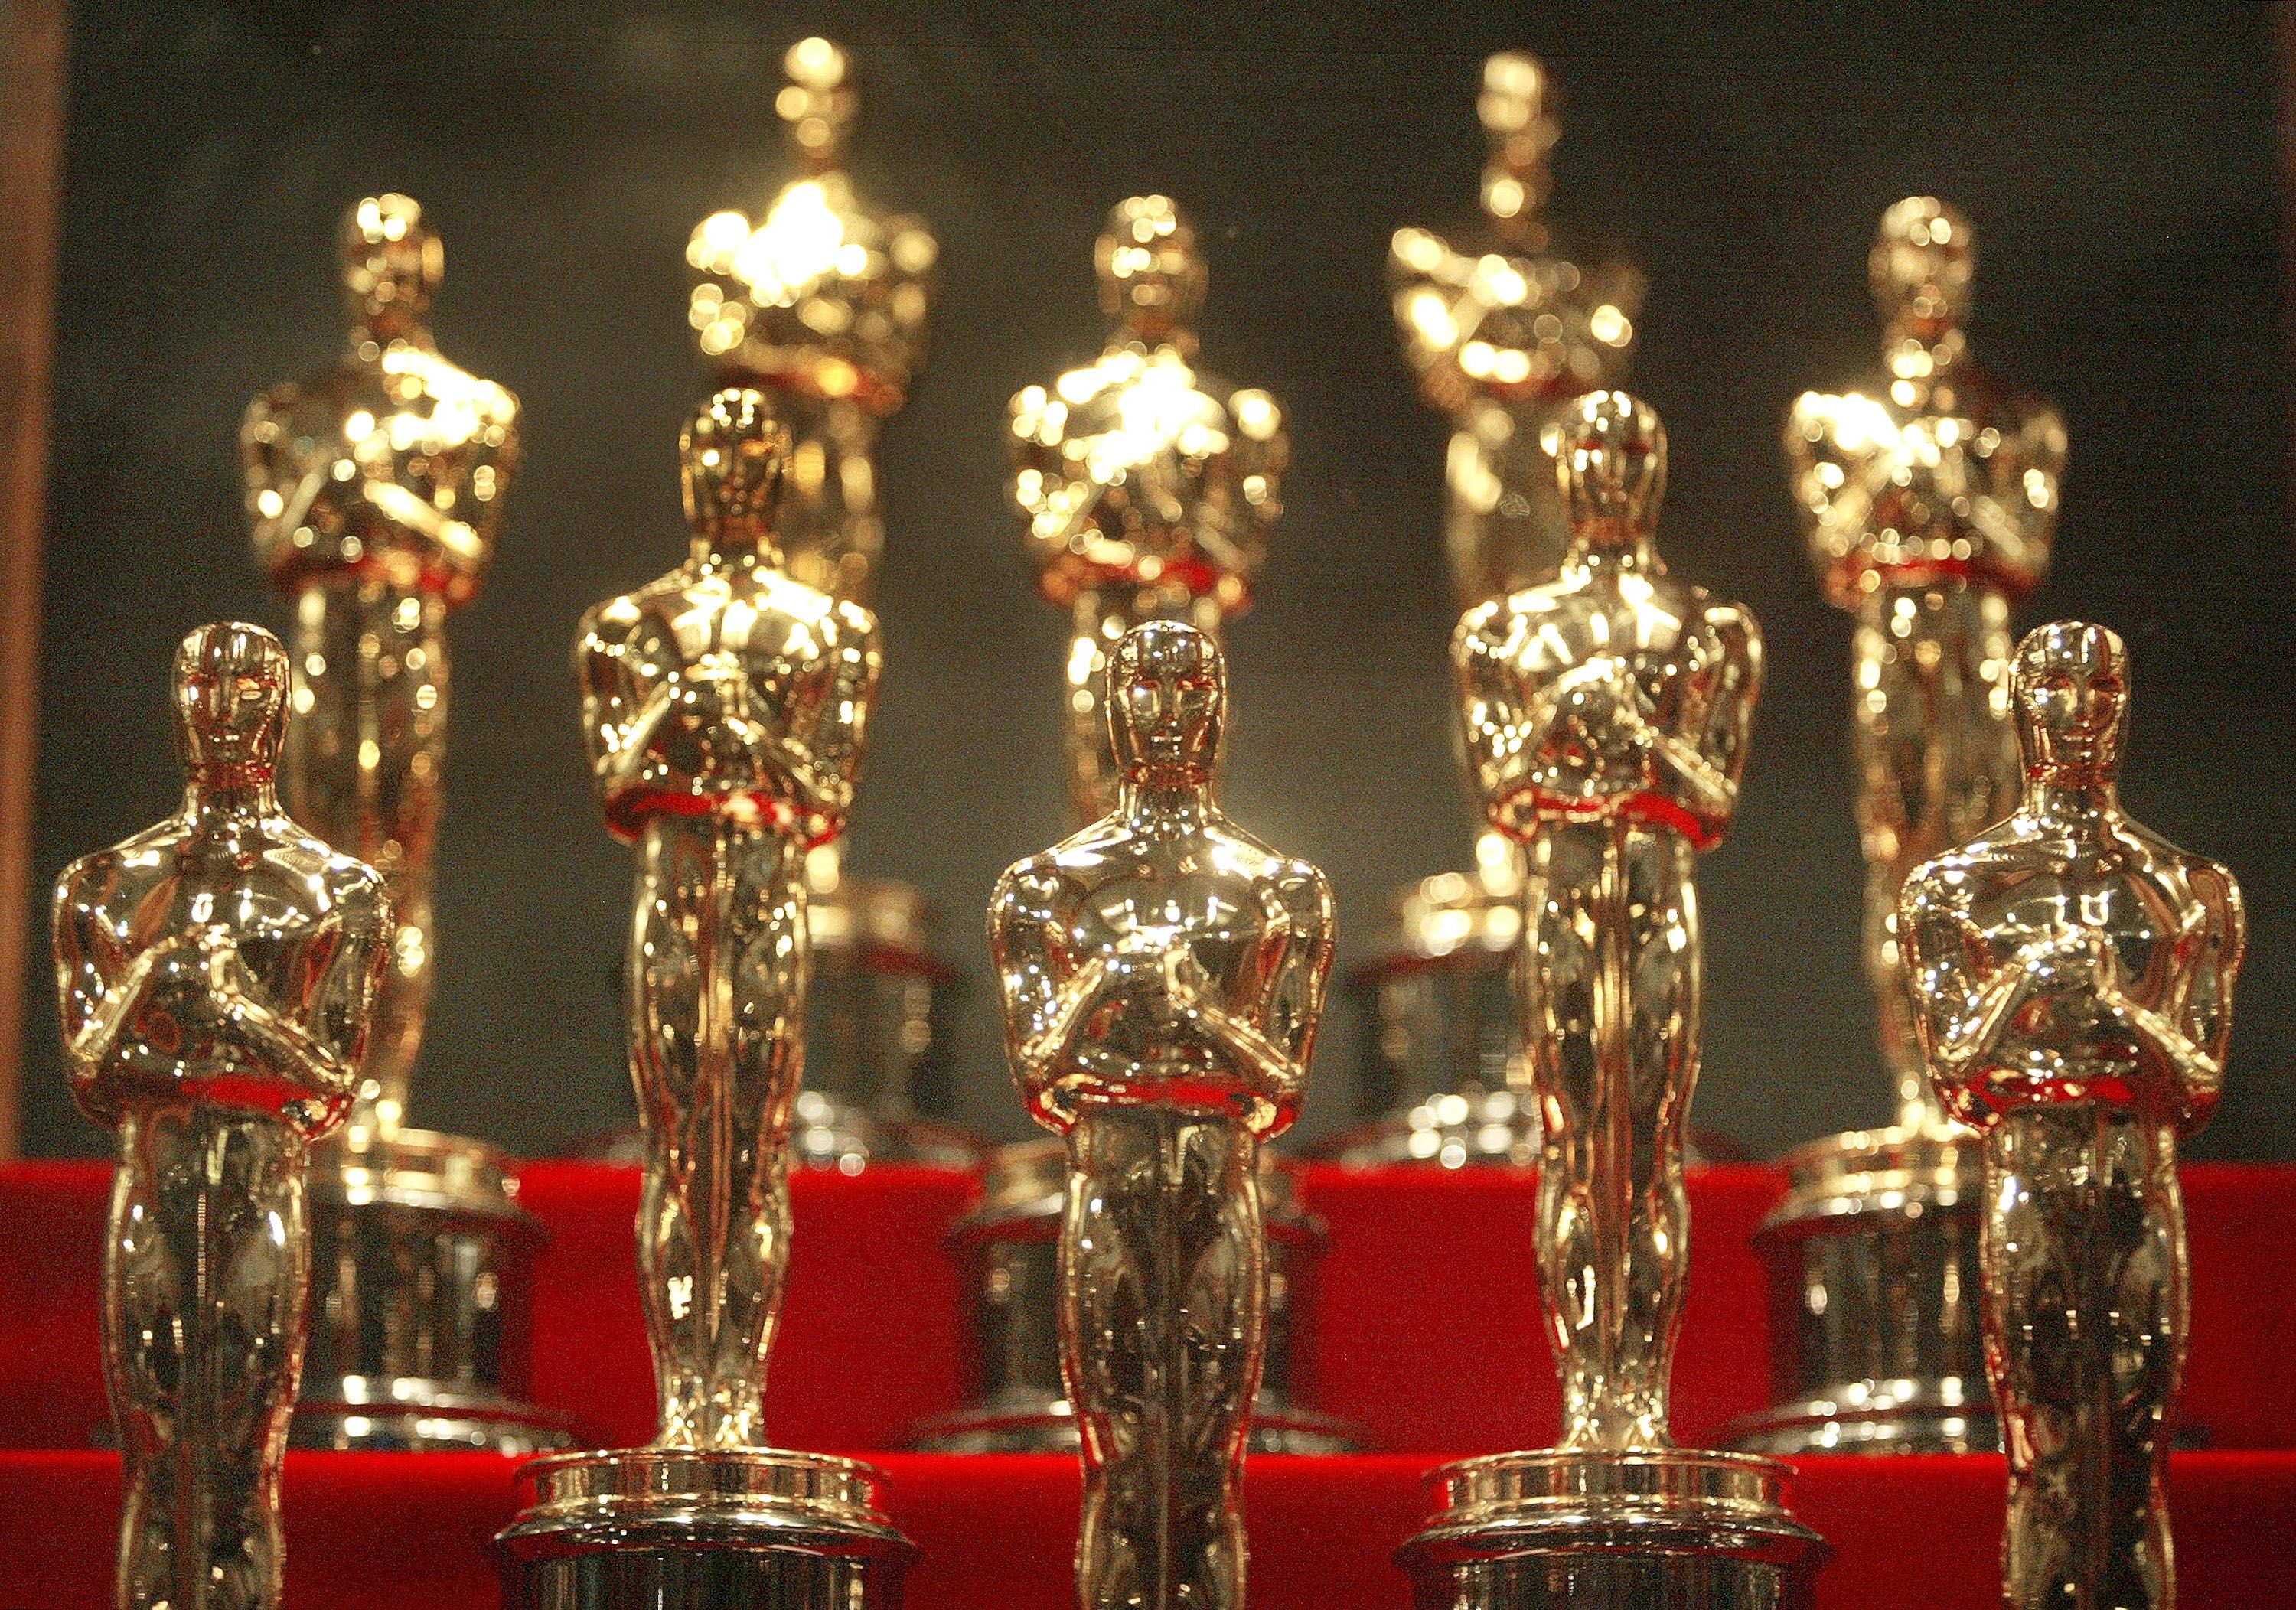 The Oscar odds for best actor favor Rami Malek.